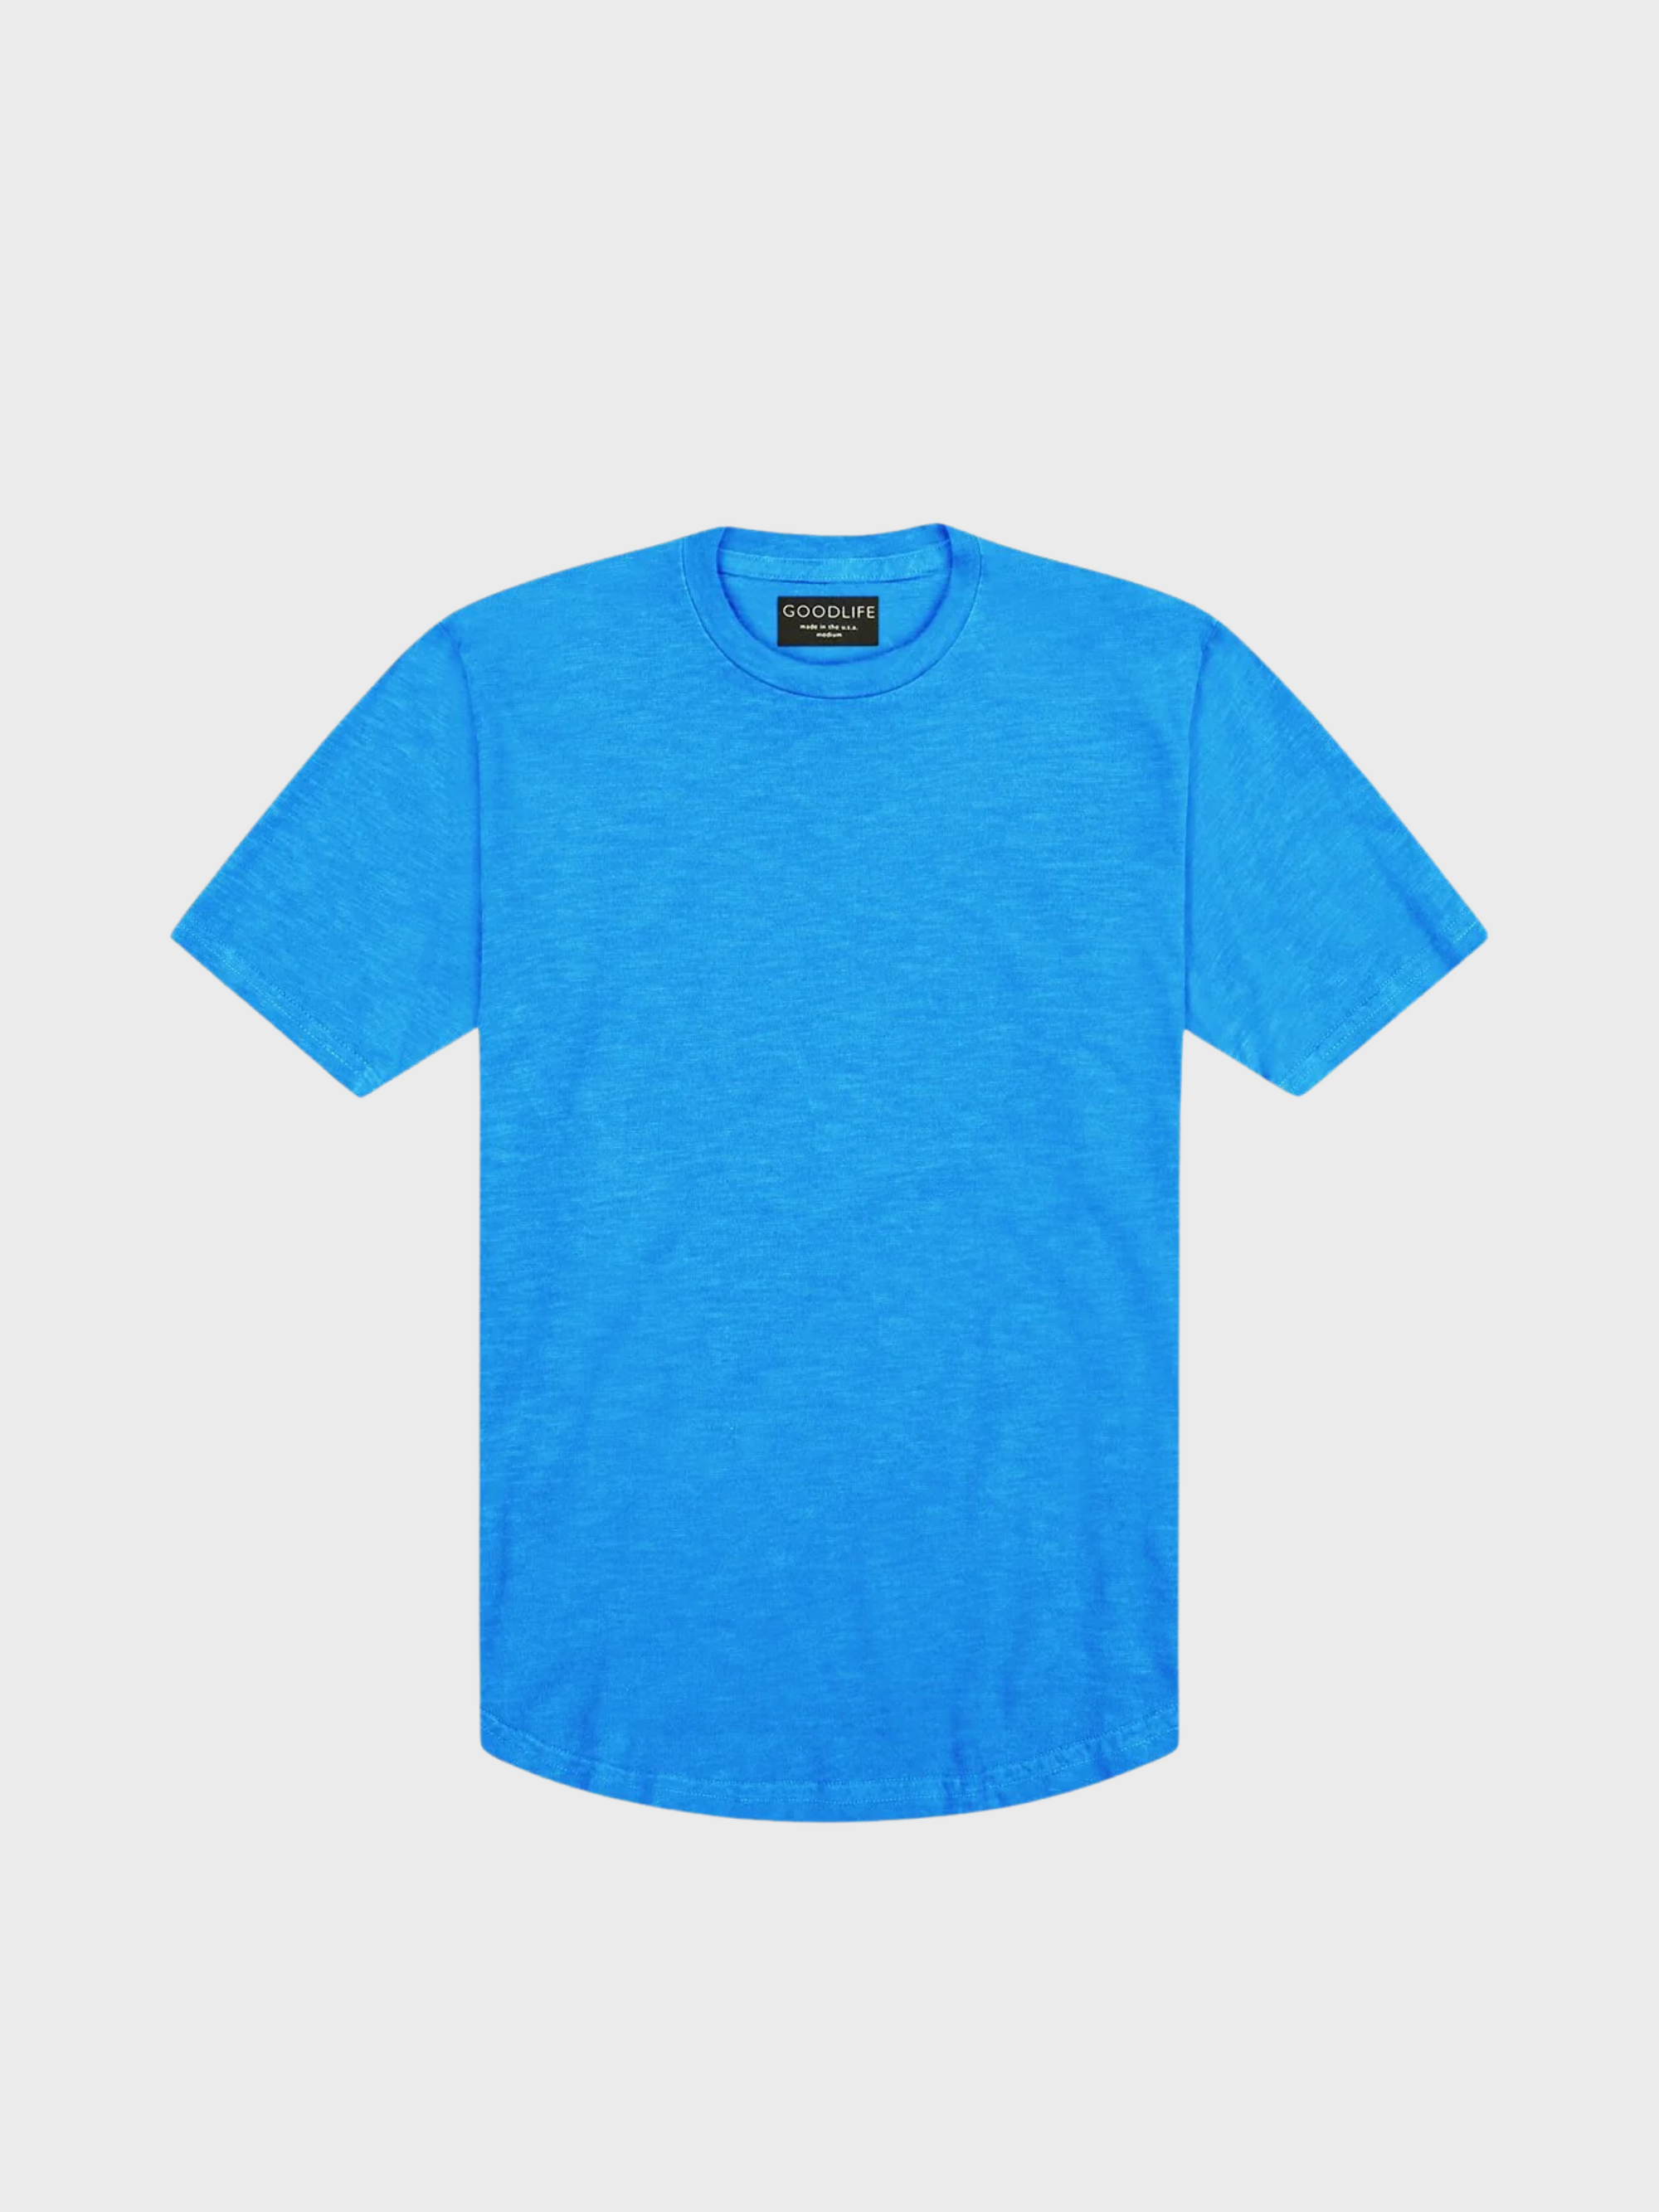 Goodlife Sun Faded Slub Scallop Crew Tee Lapis Blue-Men's T-Shirts-Yaletown-Vancouver-Surrey-Canada